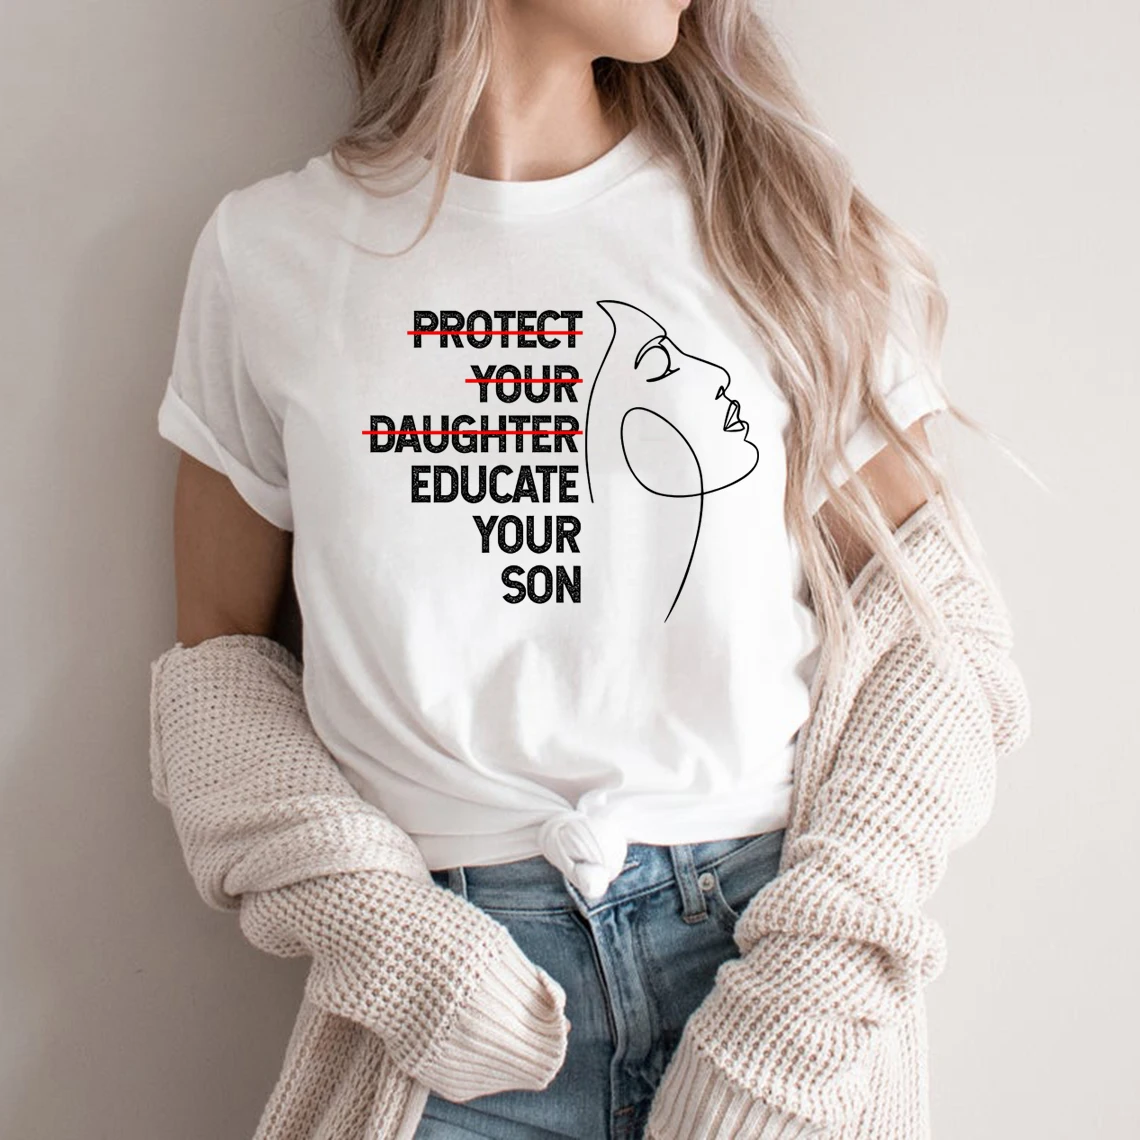 Educate Your Son T-Shirt Feminist Shirt Women Empowerment Tshirt Human Rights T-shirts Ruth Bader Ginsburg Tees Girl Power Tops